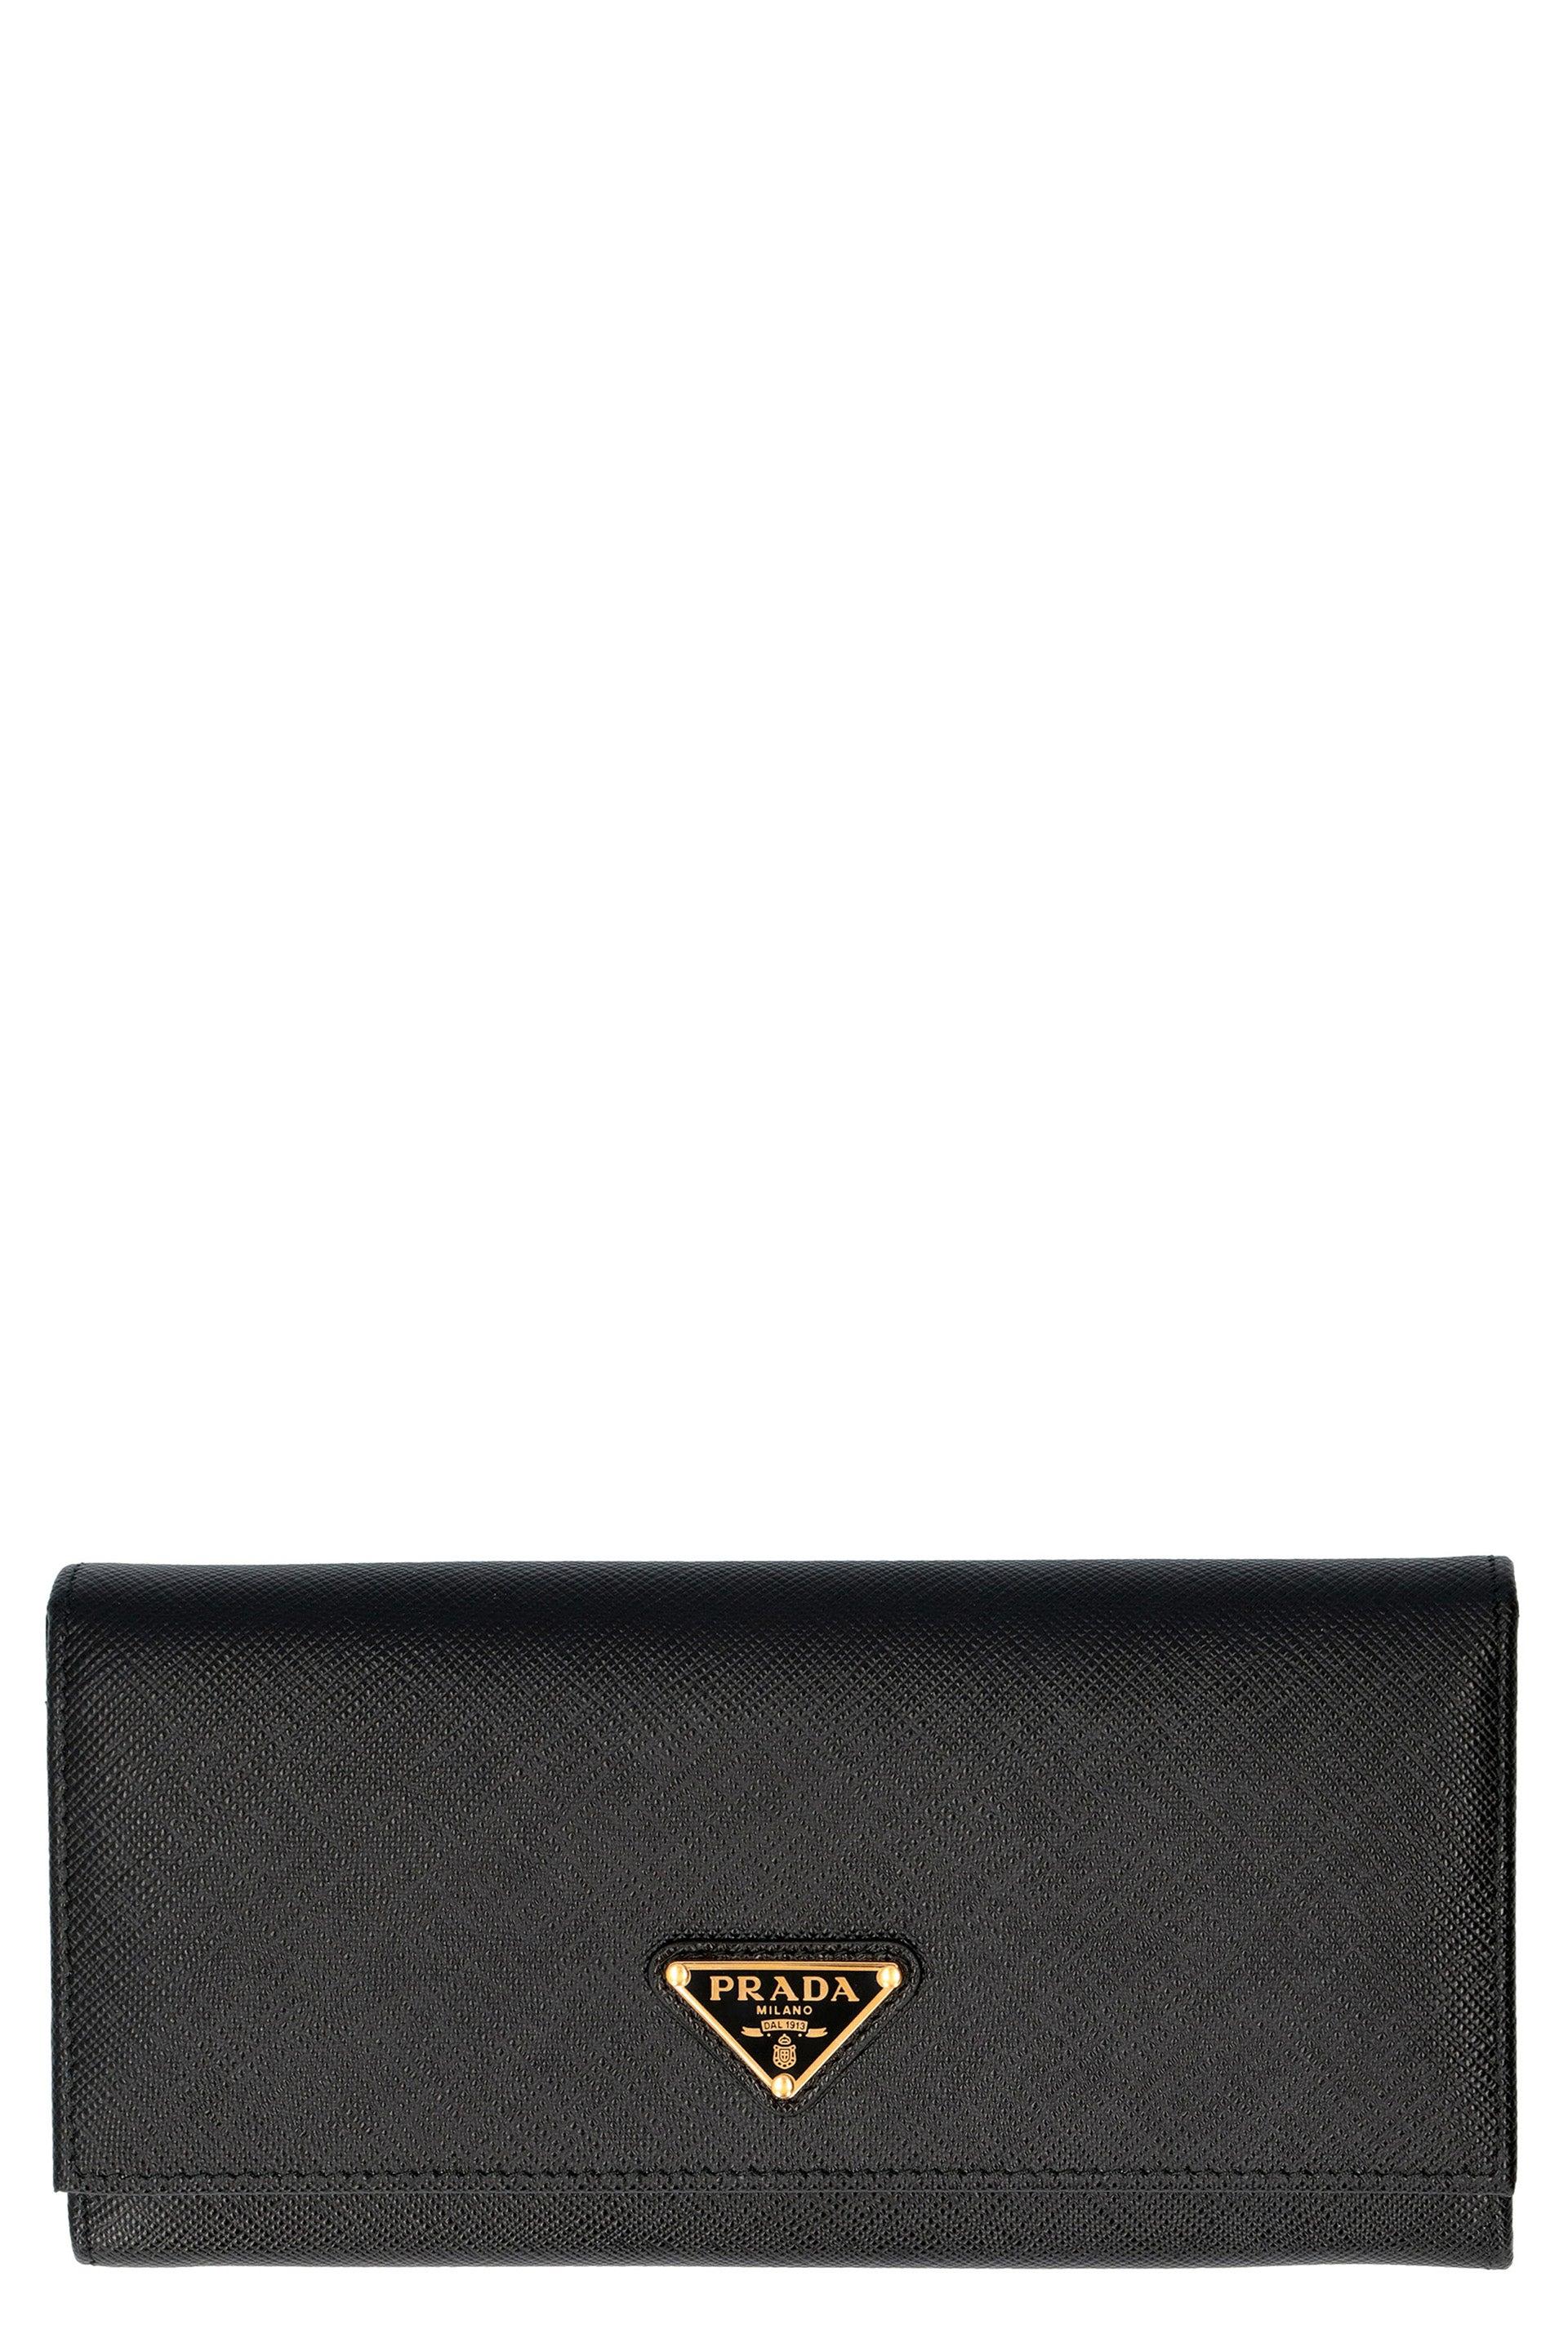 Prada Saffiano Leather Wallet in Black | Lyst